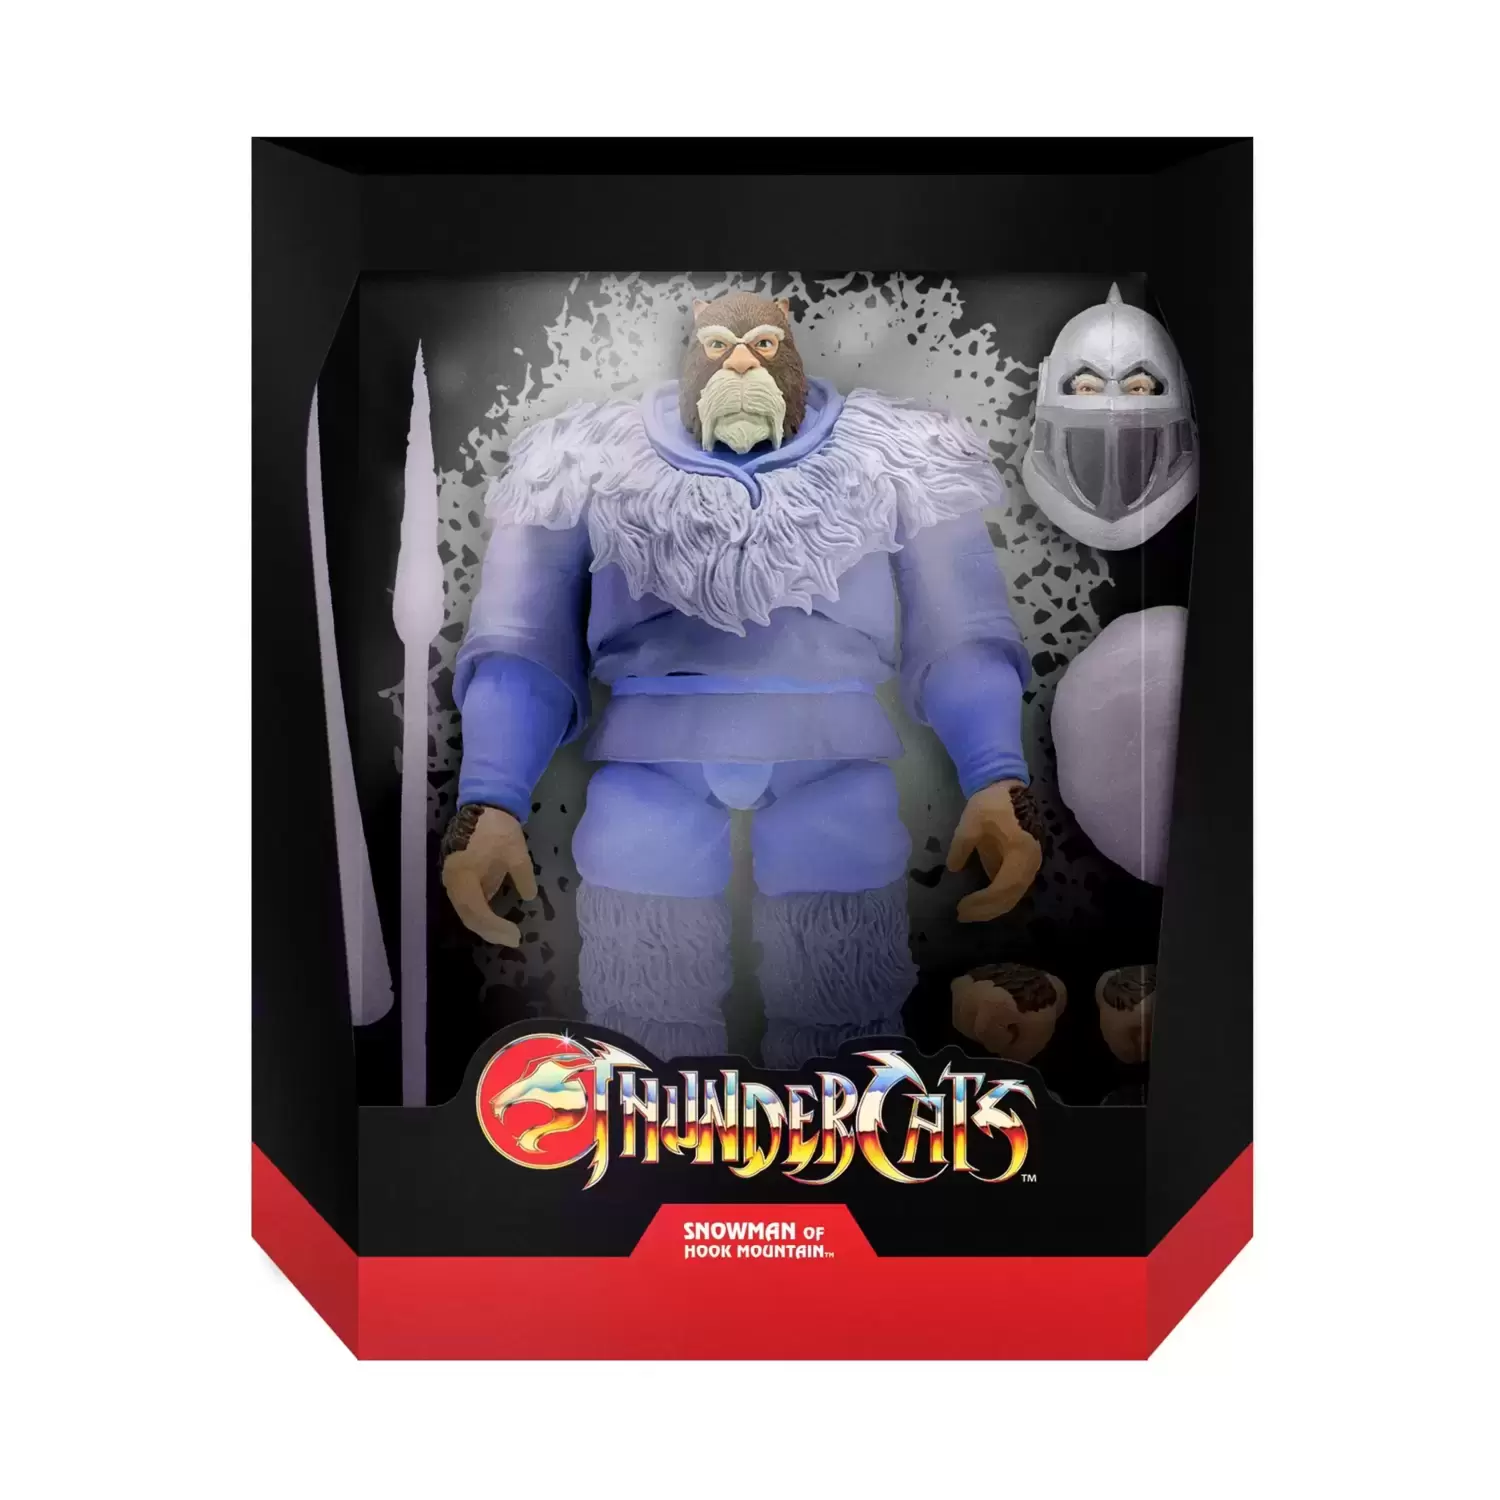 Super7 - ULTIMATES! - Thundercats - Snowman of Hook Mountain